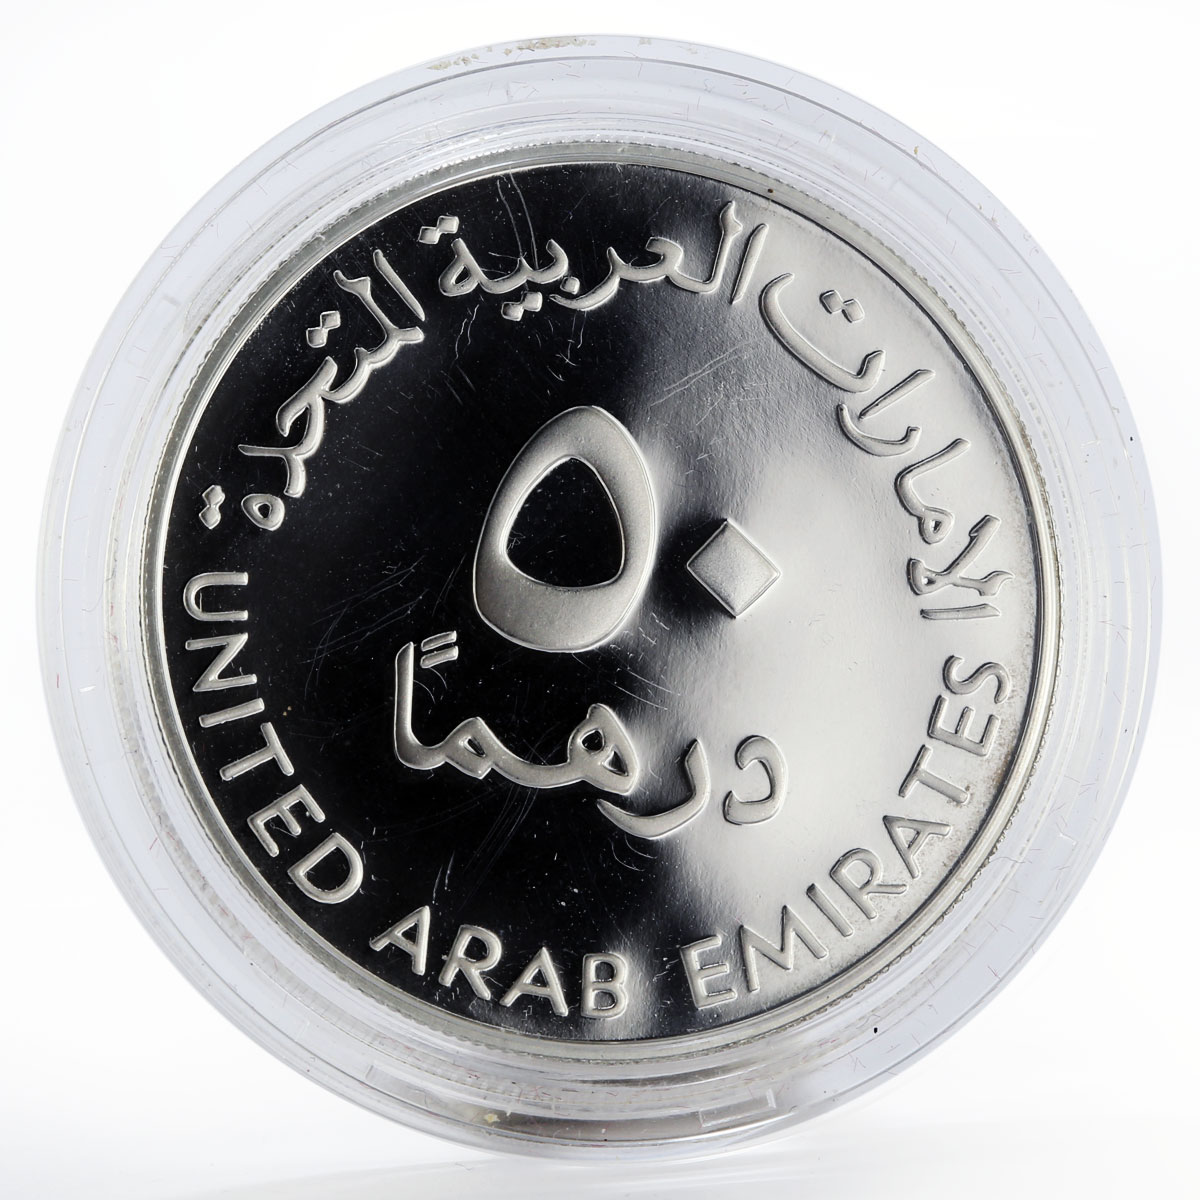 United Arab Emirates 50 dirhams Sharjah City for Humanitarian silver coin 2004